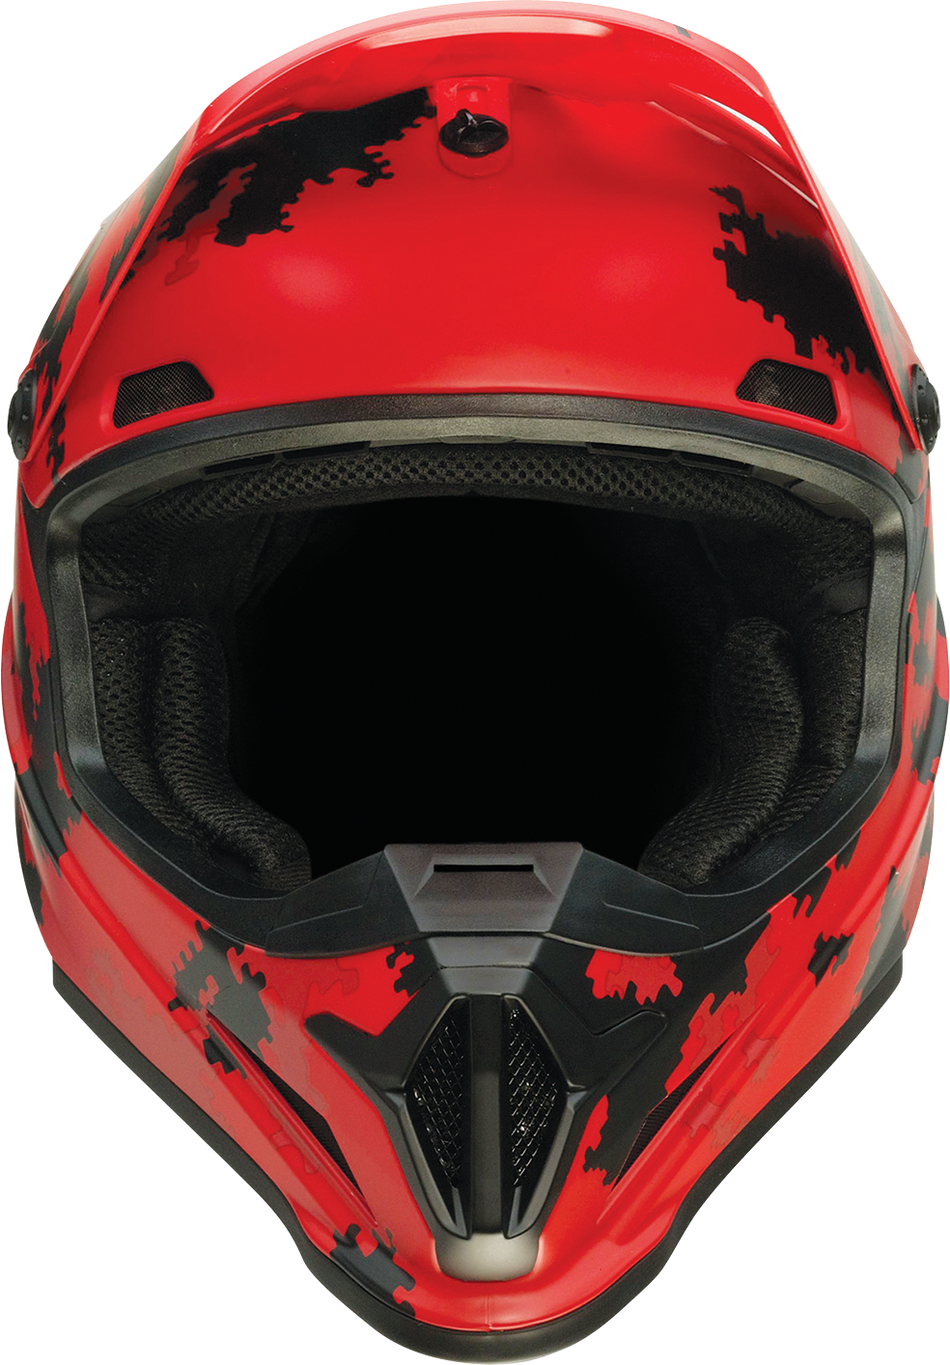 Z1R Rise Helmet - Digi Camo - Red - Medium 0110-7282